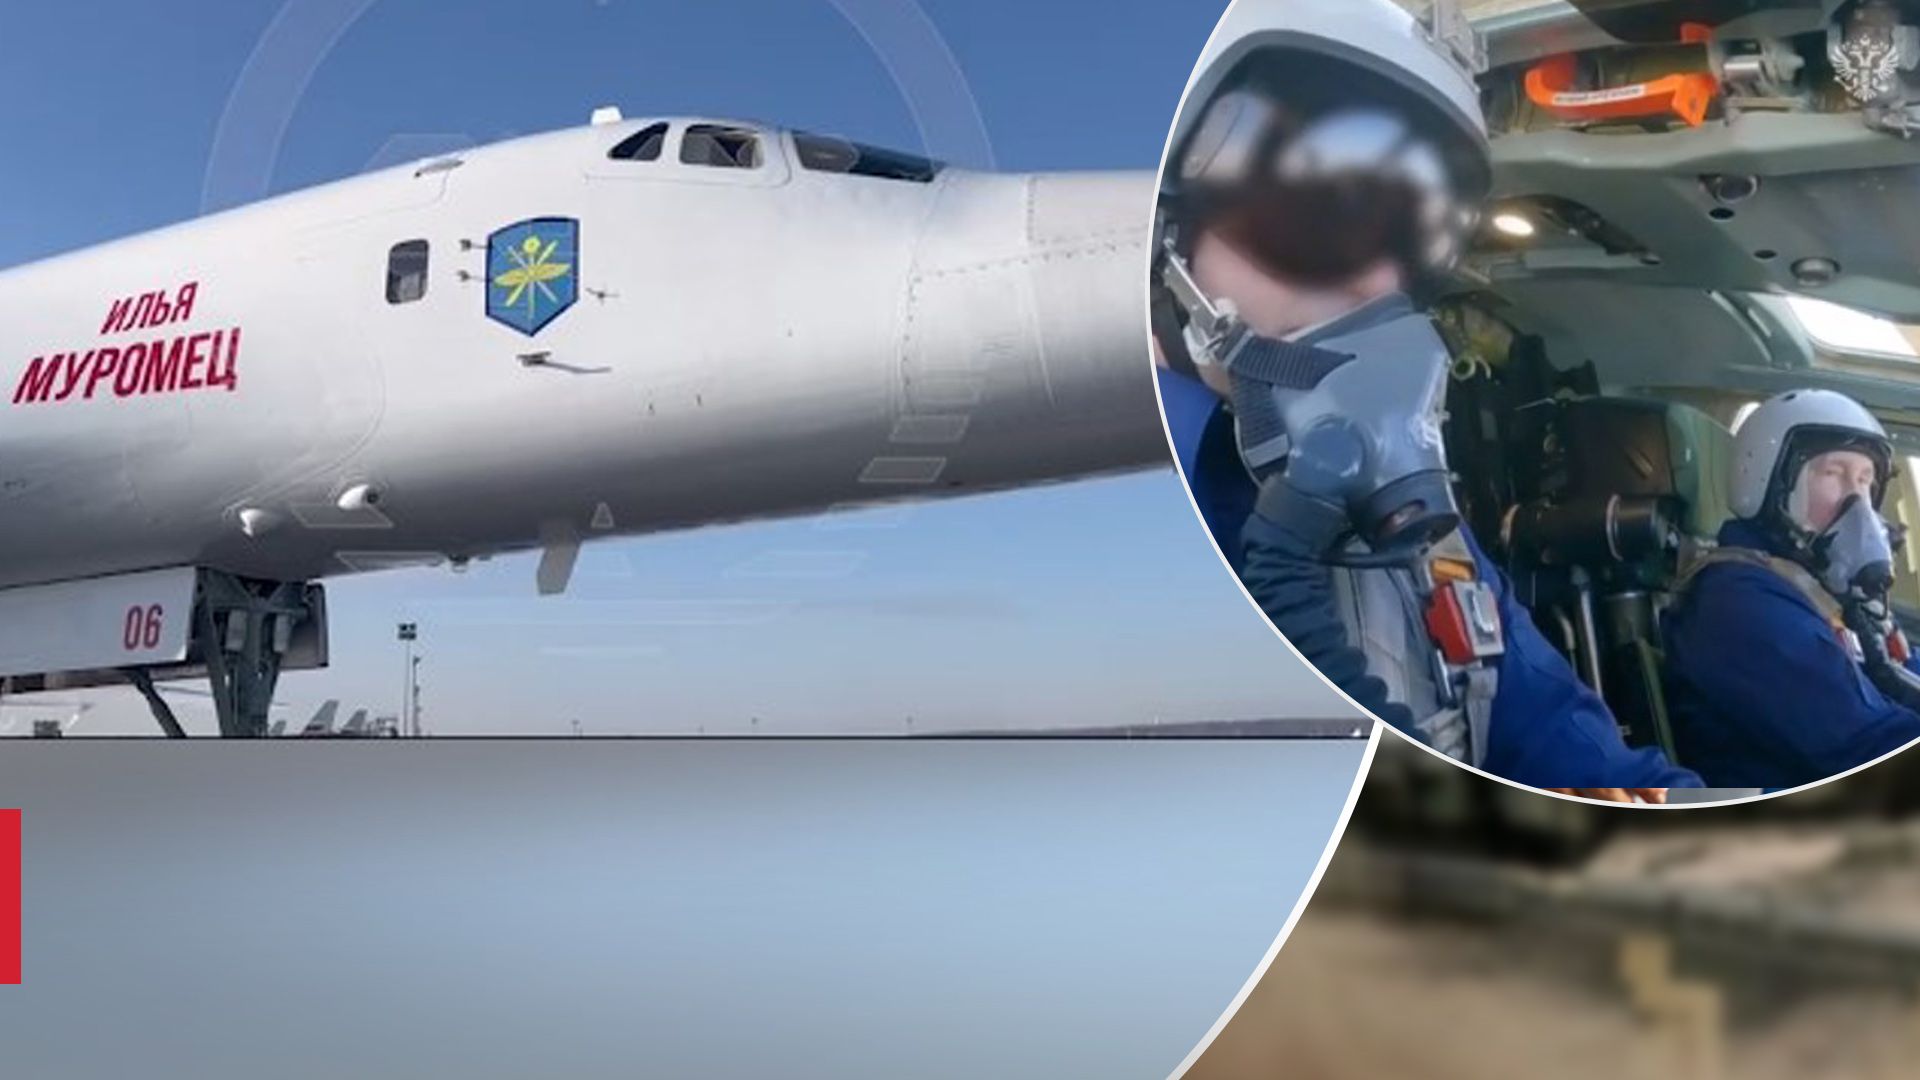 Путин полчаса полетал на ракетоносце Ту-160м, но его высмеяли россияне - 24 Канал